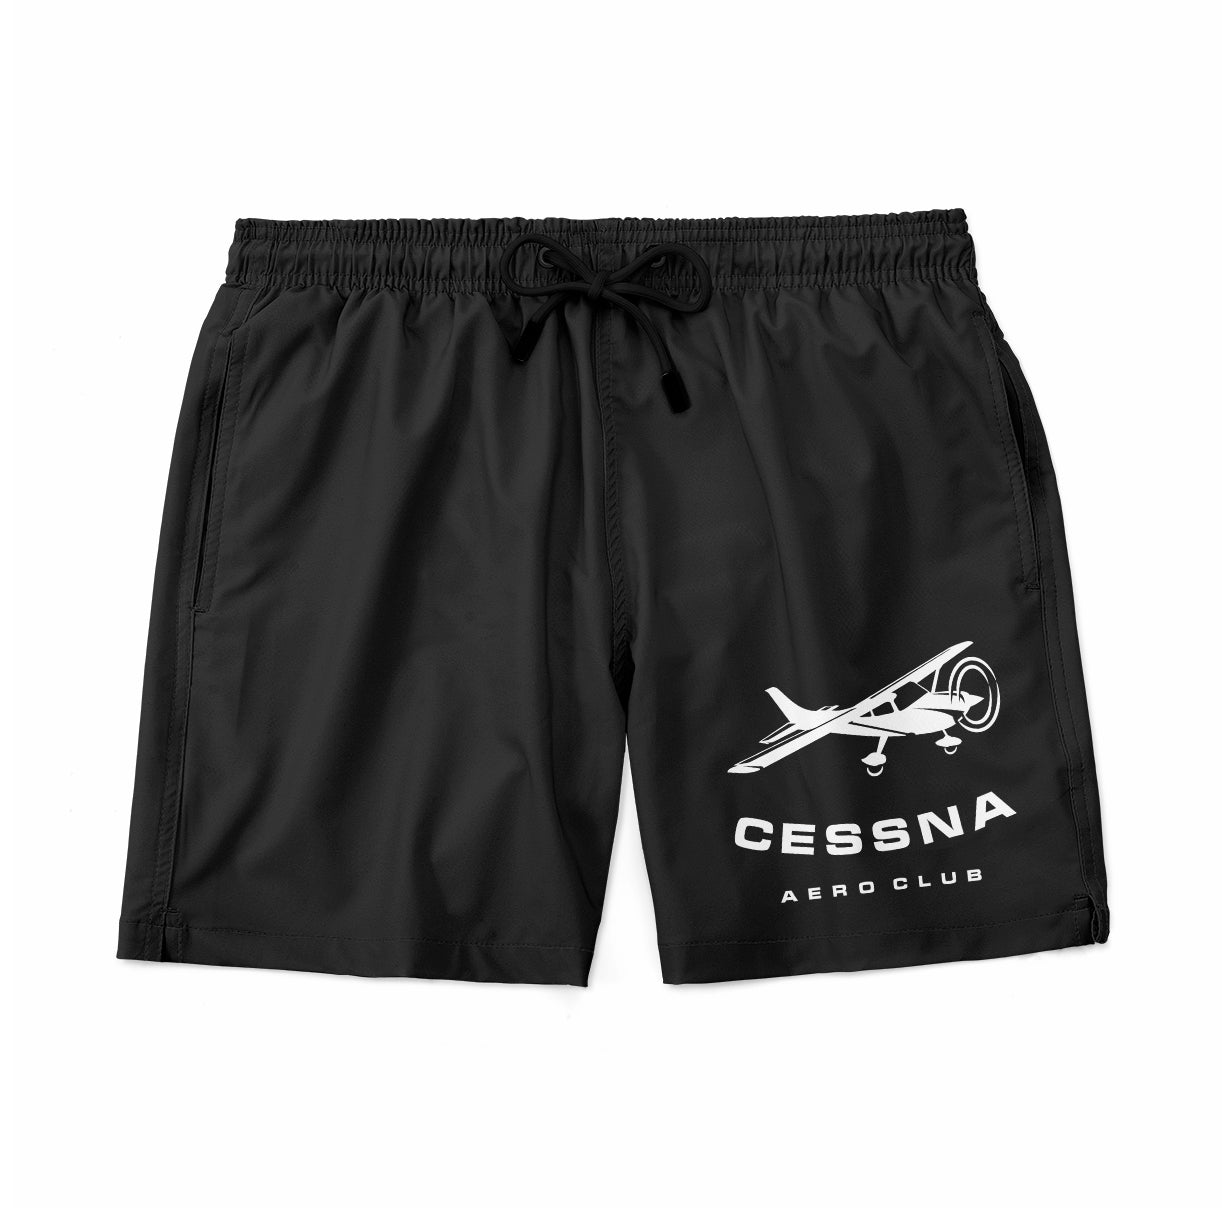 Cessna Aeroclub Designed Swim Trunks & Shorts